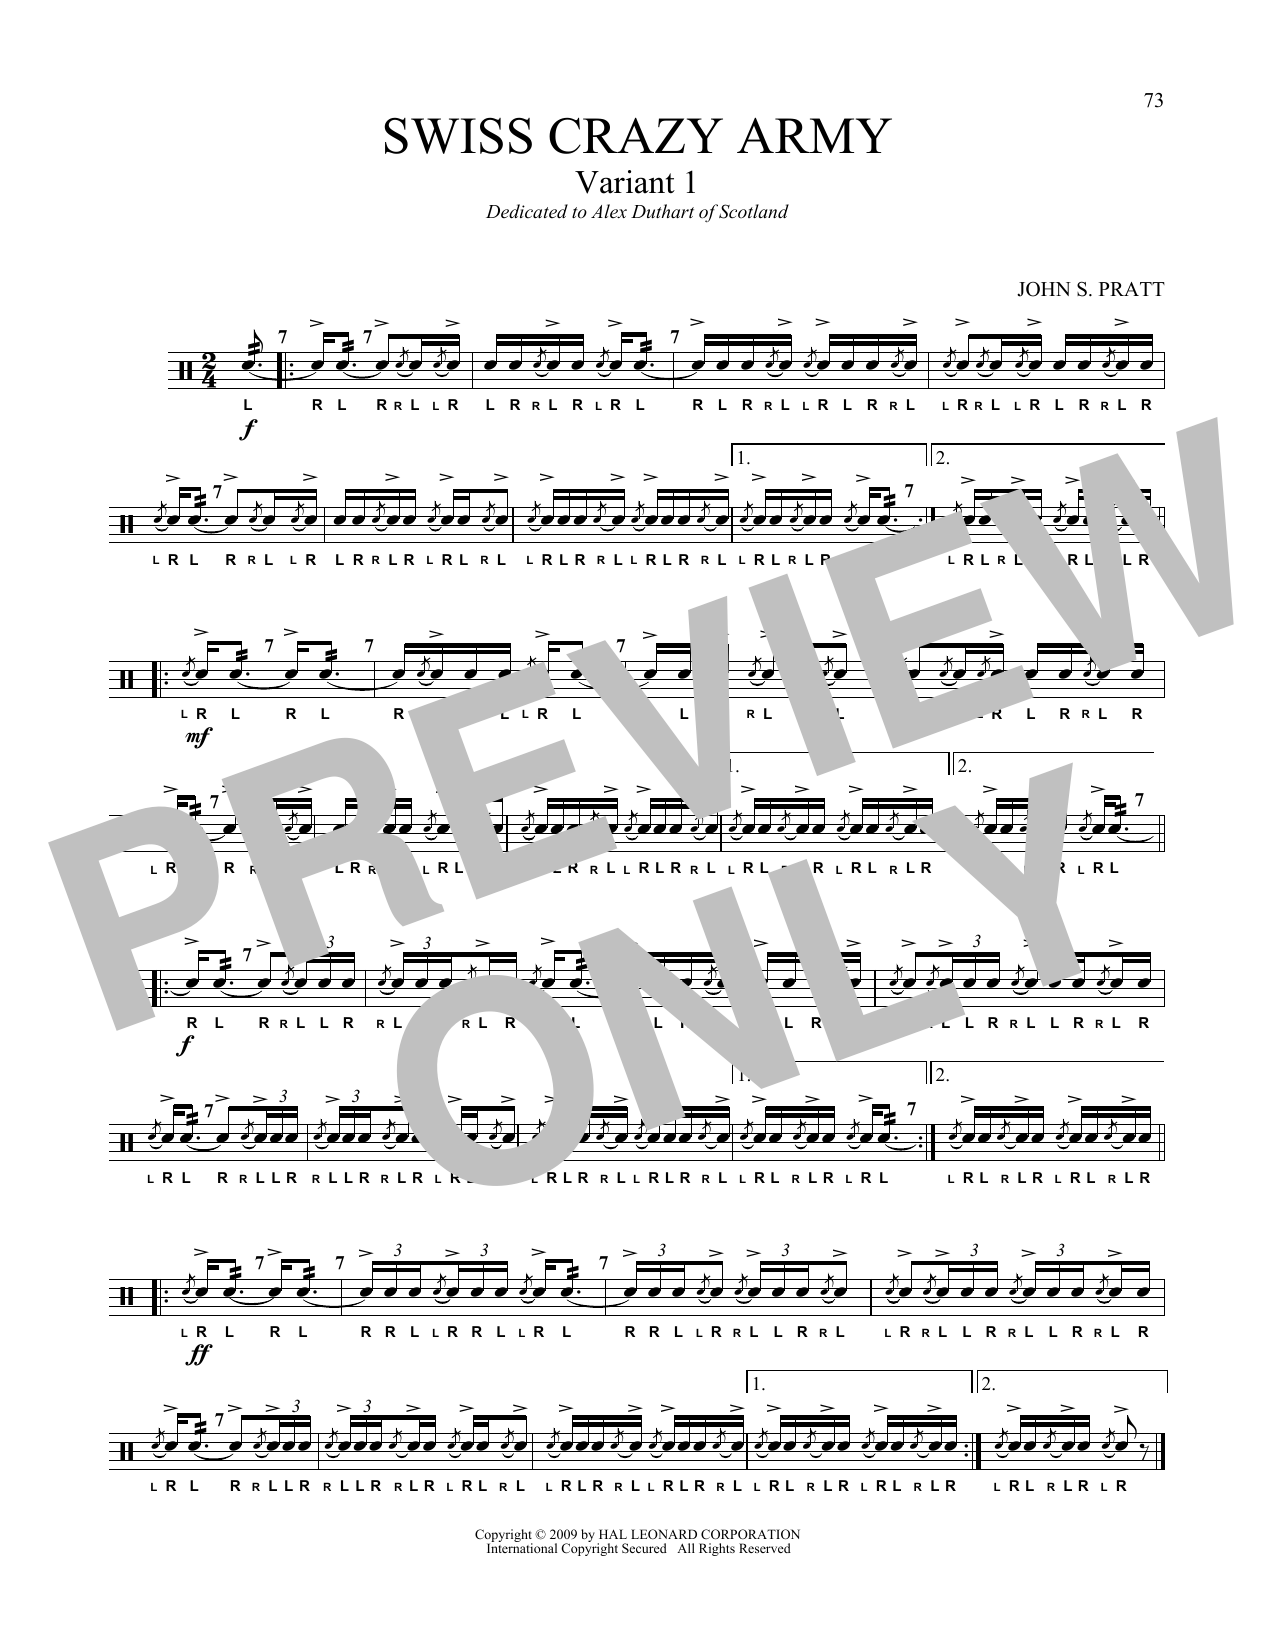 Download John S. Pratt Swiss Crazy Army Variant 1 Sheet Music